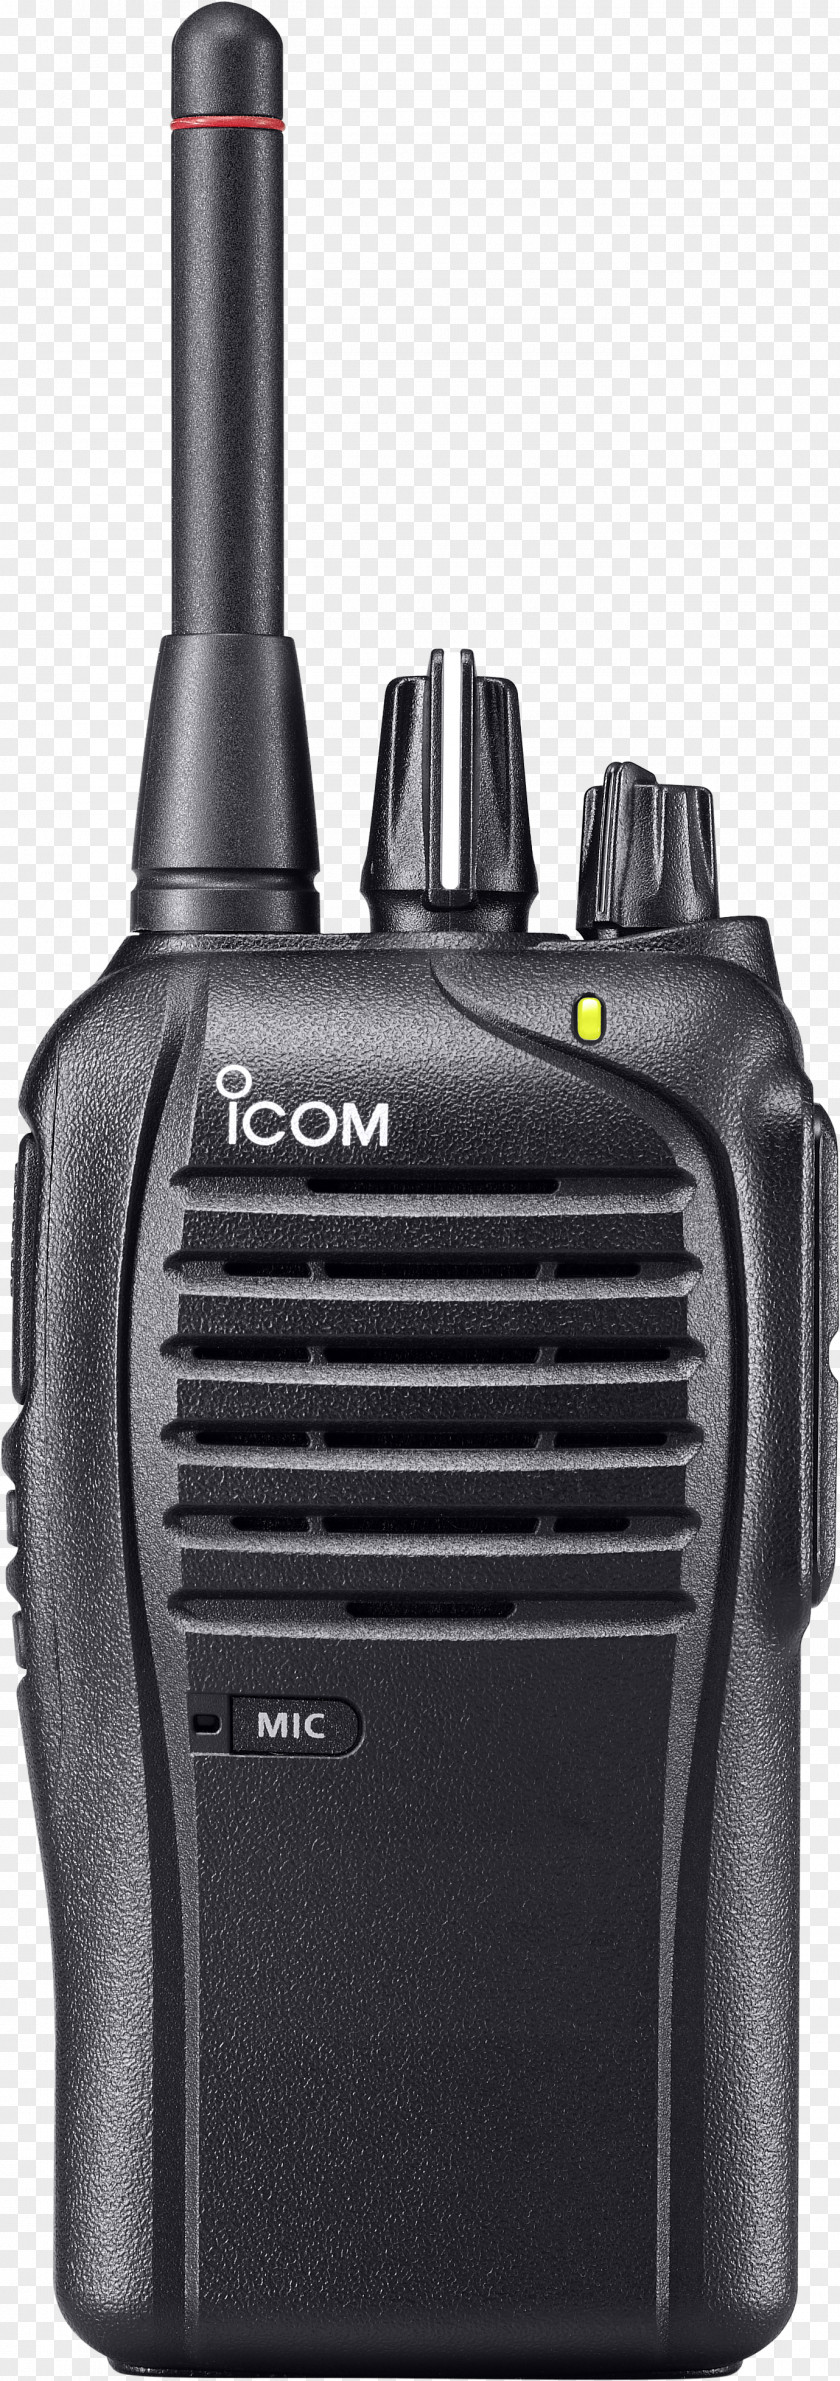 Radio Two-way PMR446 Icom Incorporated Walkie-talkie PNG